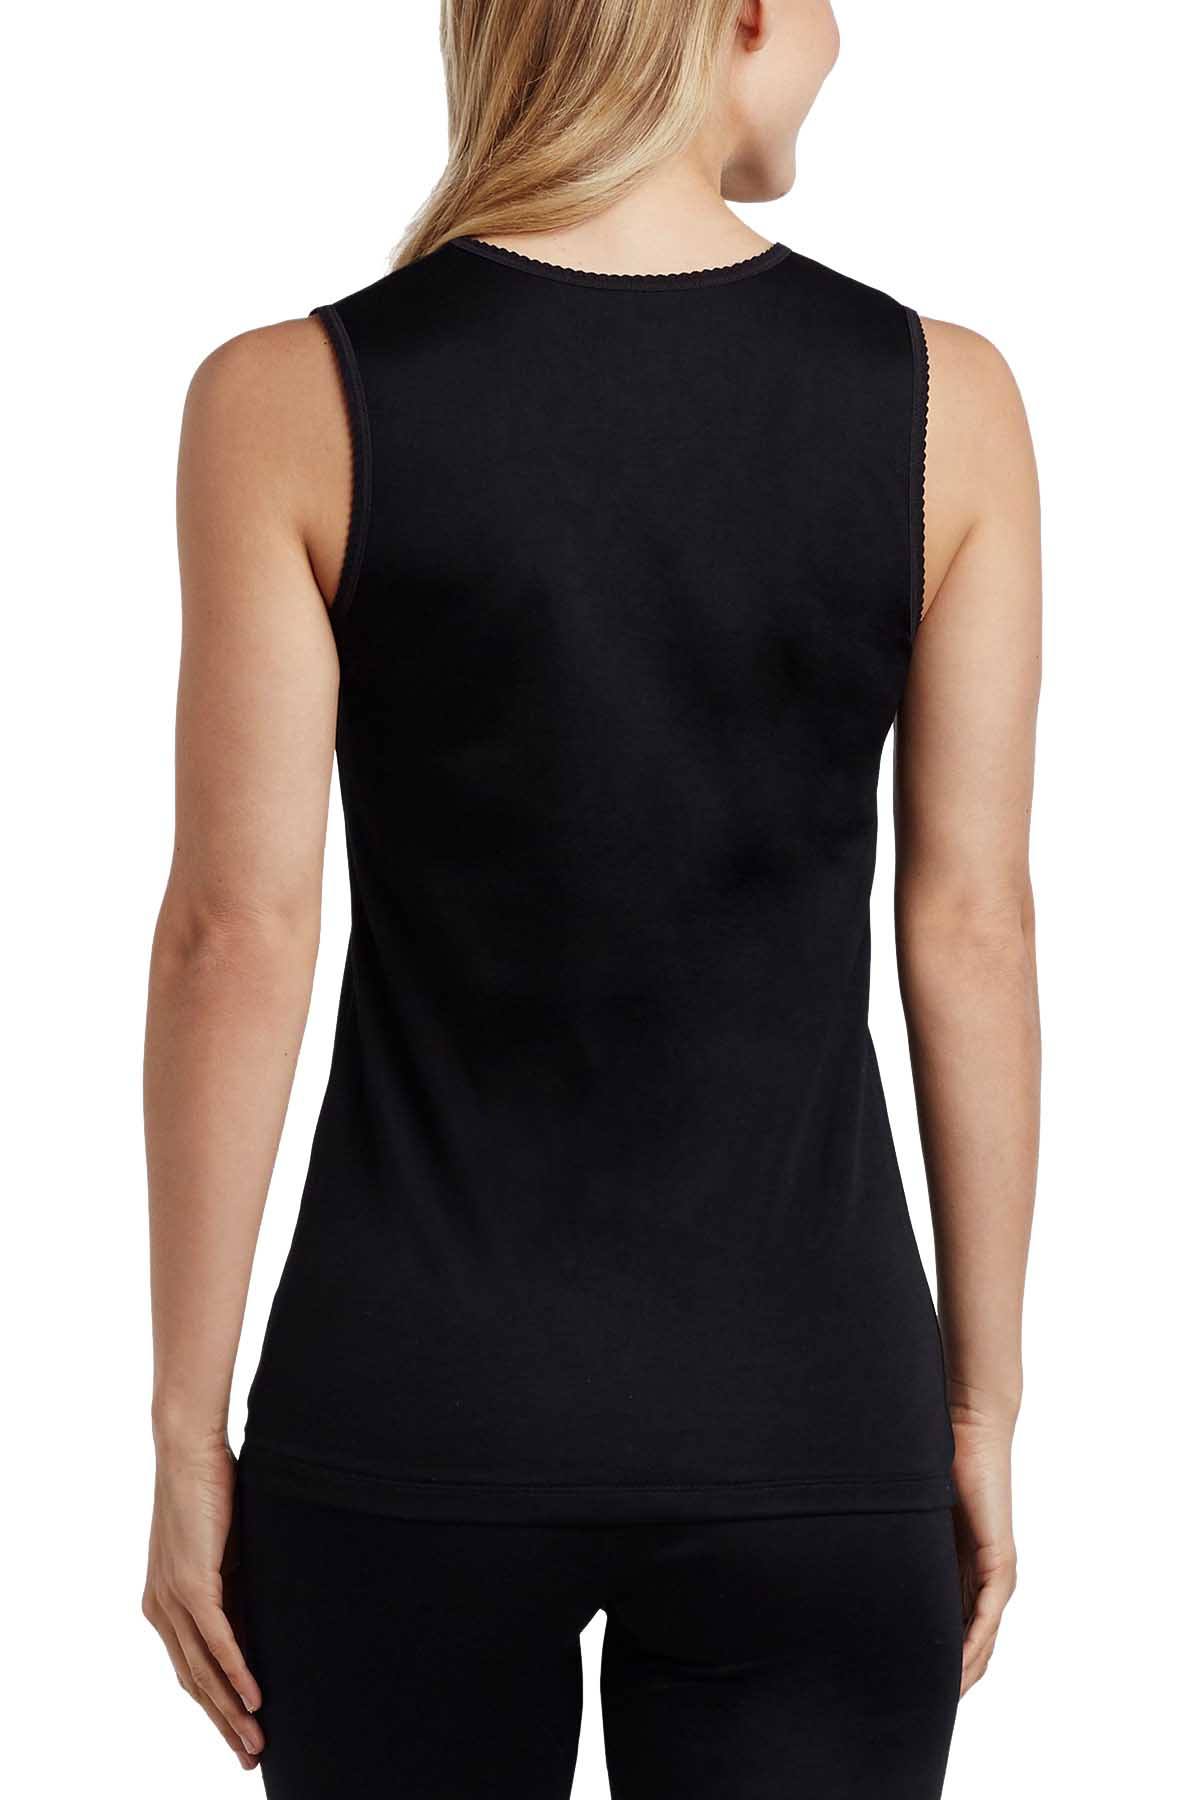 CuddlDuds Black Softwear Lace-Trim V-Neck Tank Top